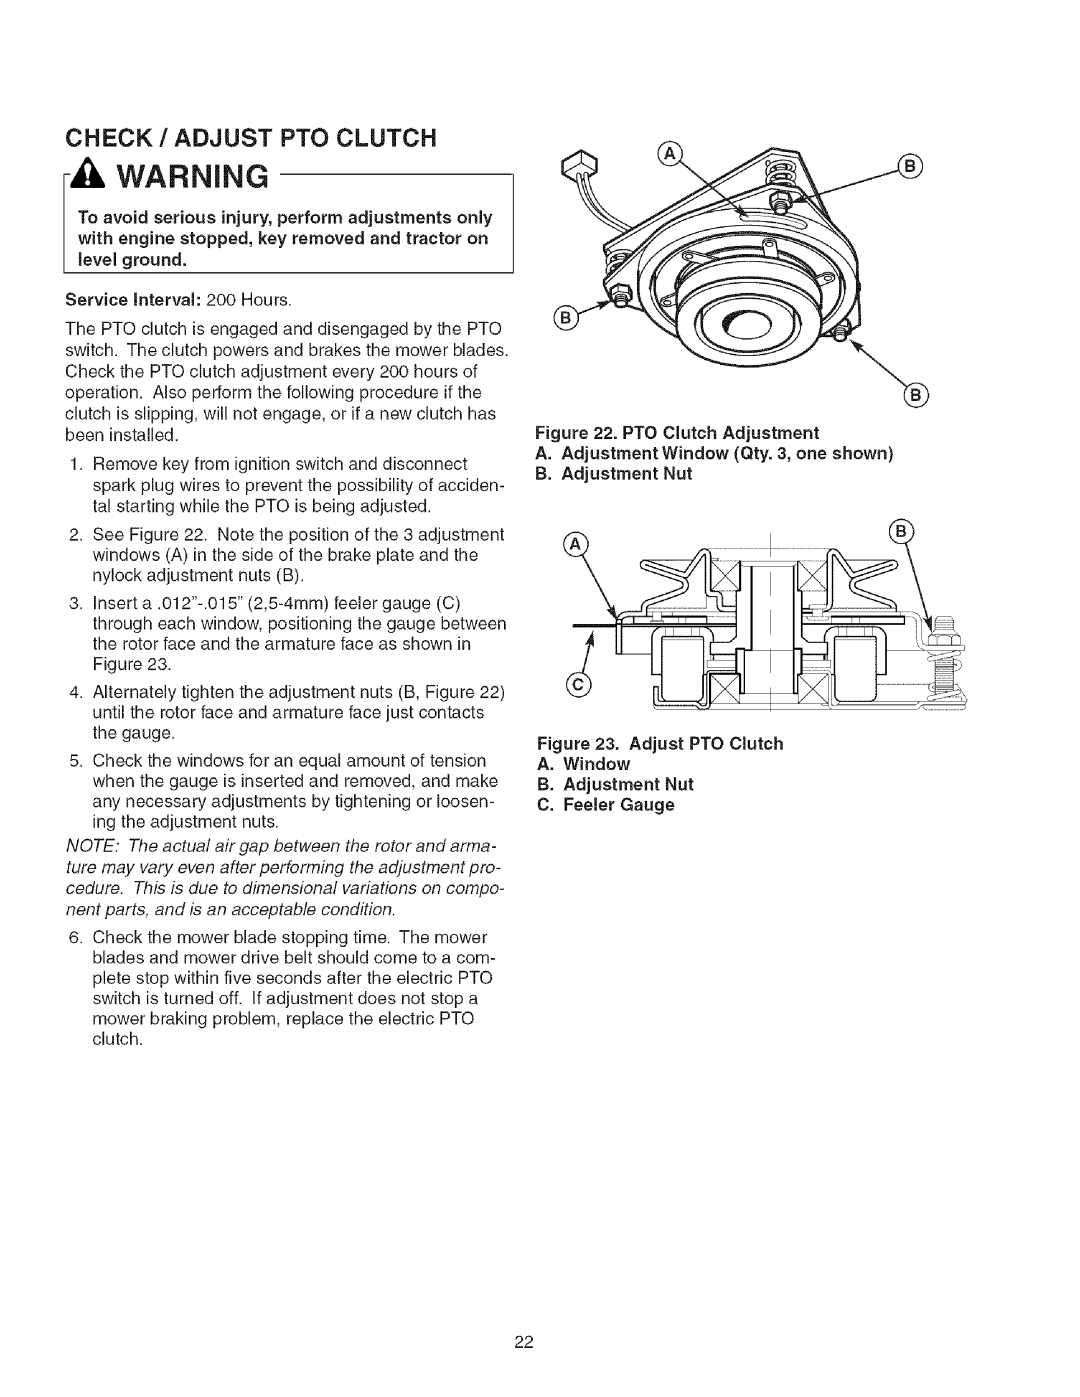 Craftsman 107.2777 manual •Ilwarning, Check / Adjust Pto Clutch, Service interval: 200 Hours, B.Adjustment Nut 